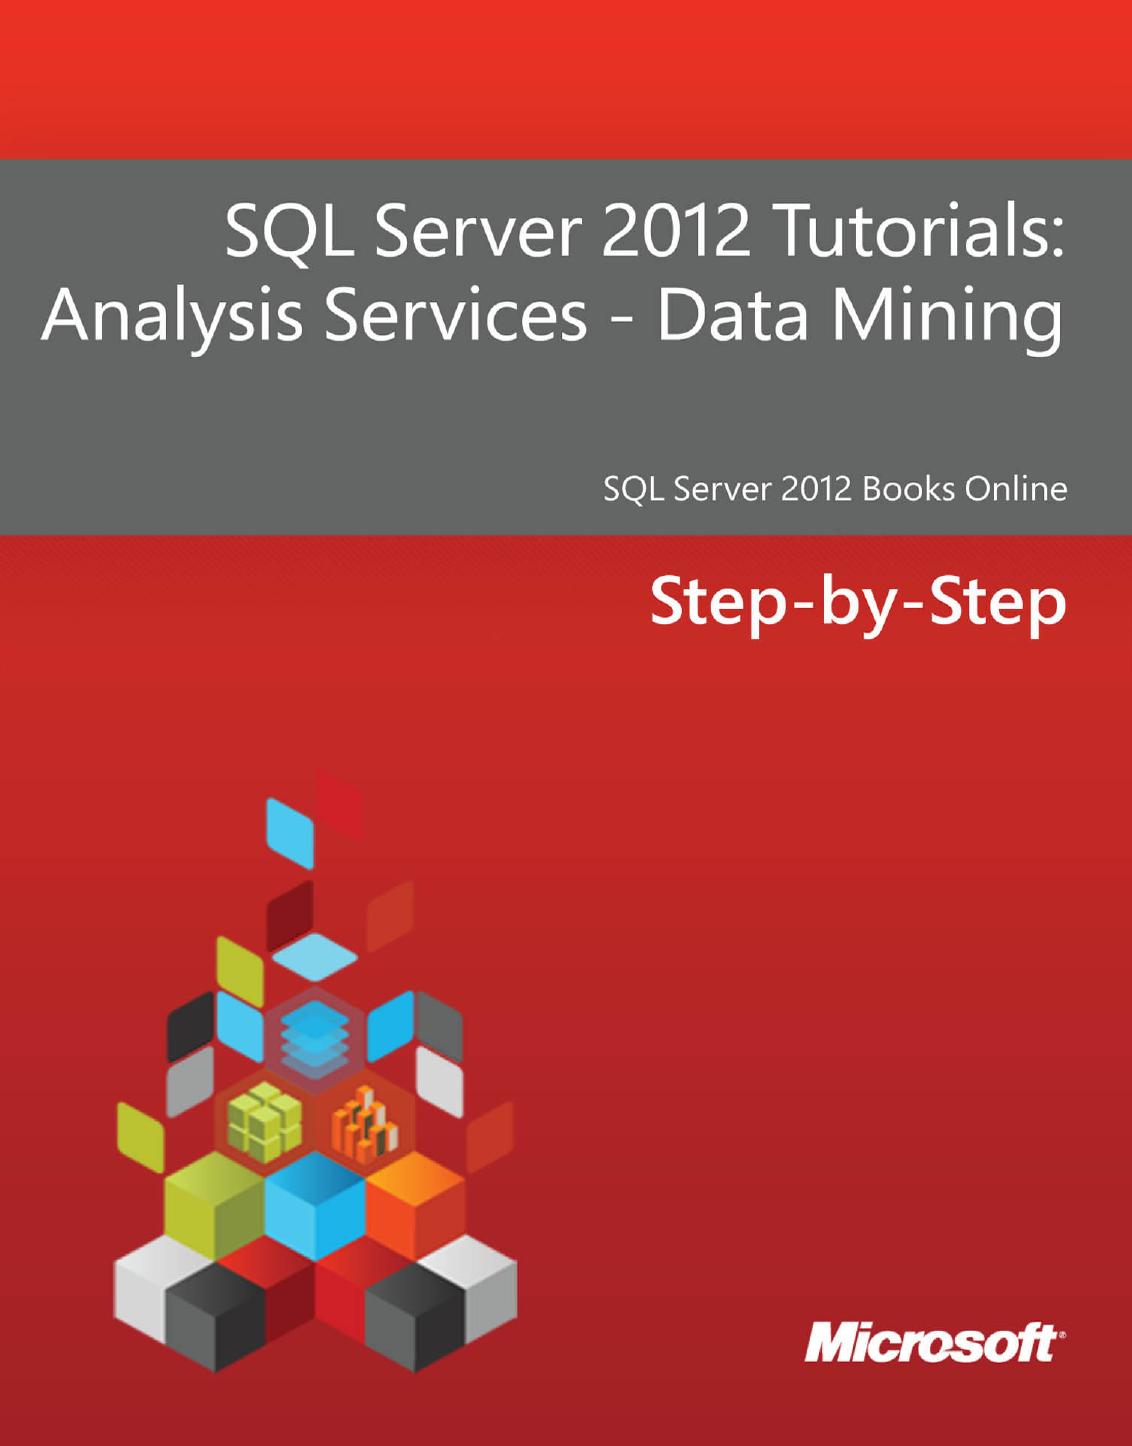 Analysis Services Data Mining.pdf